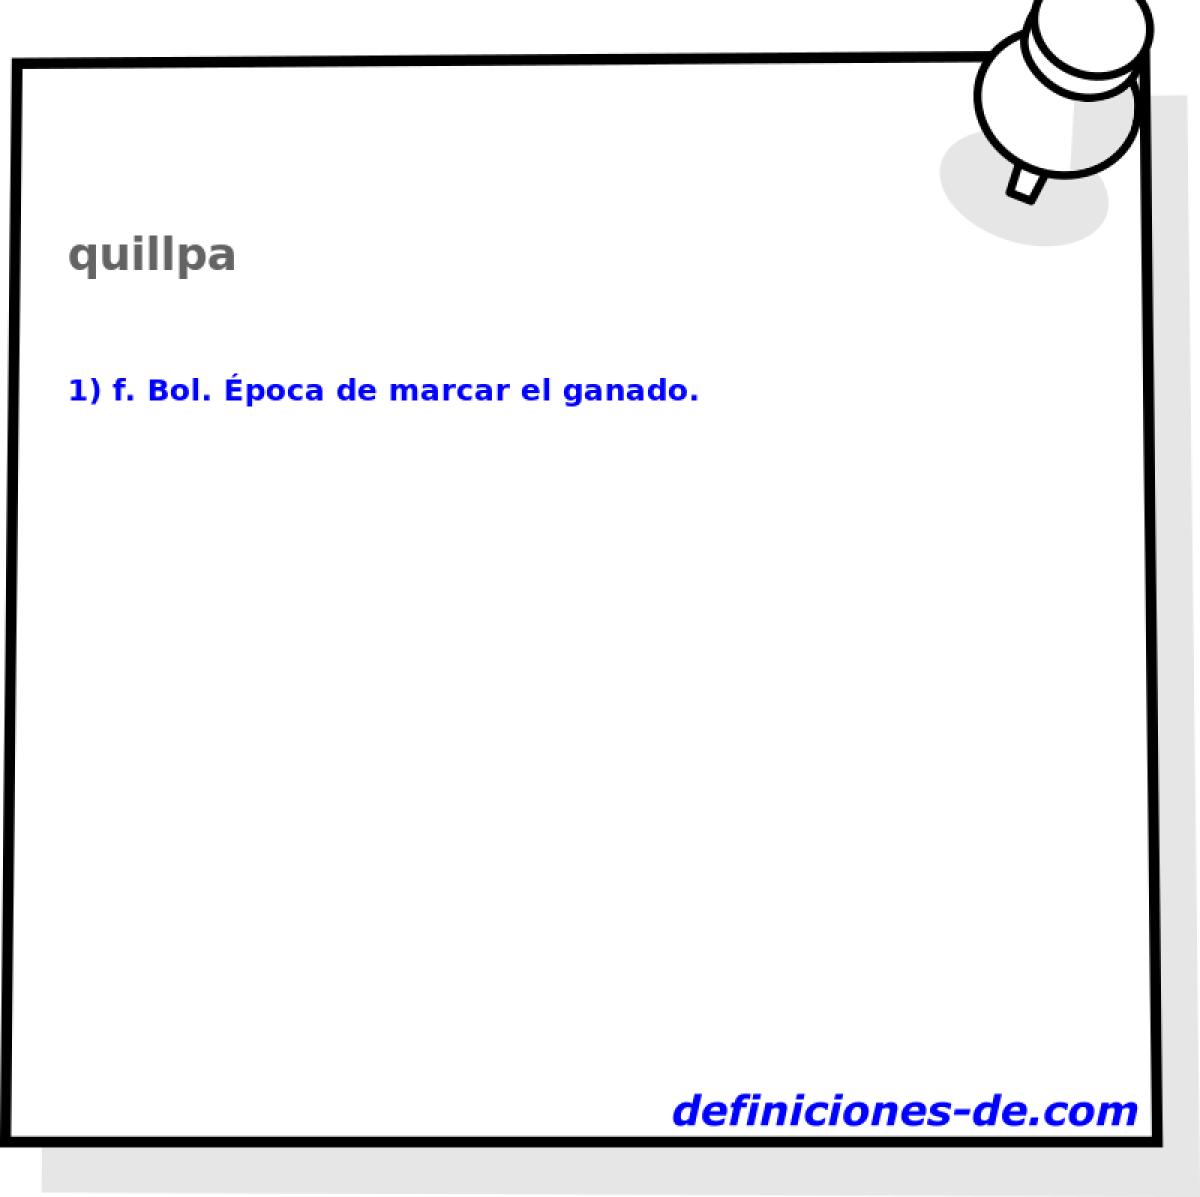 quillpa 